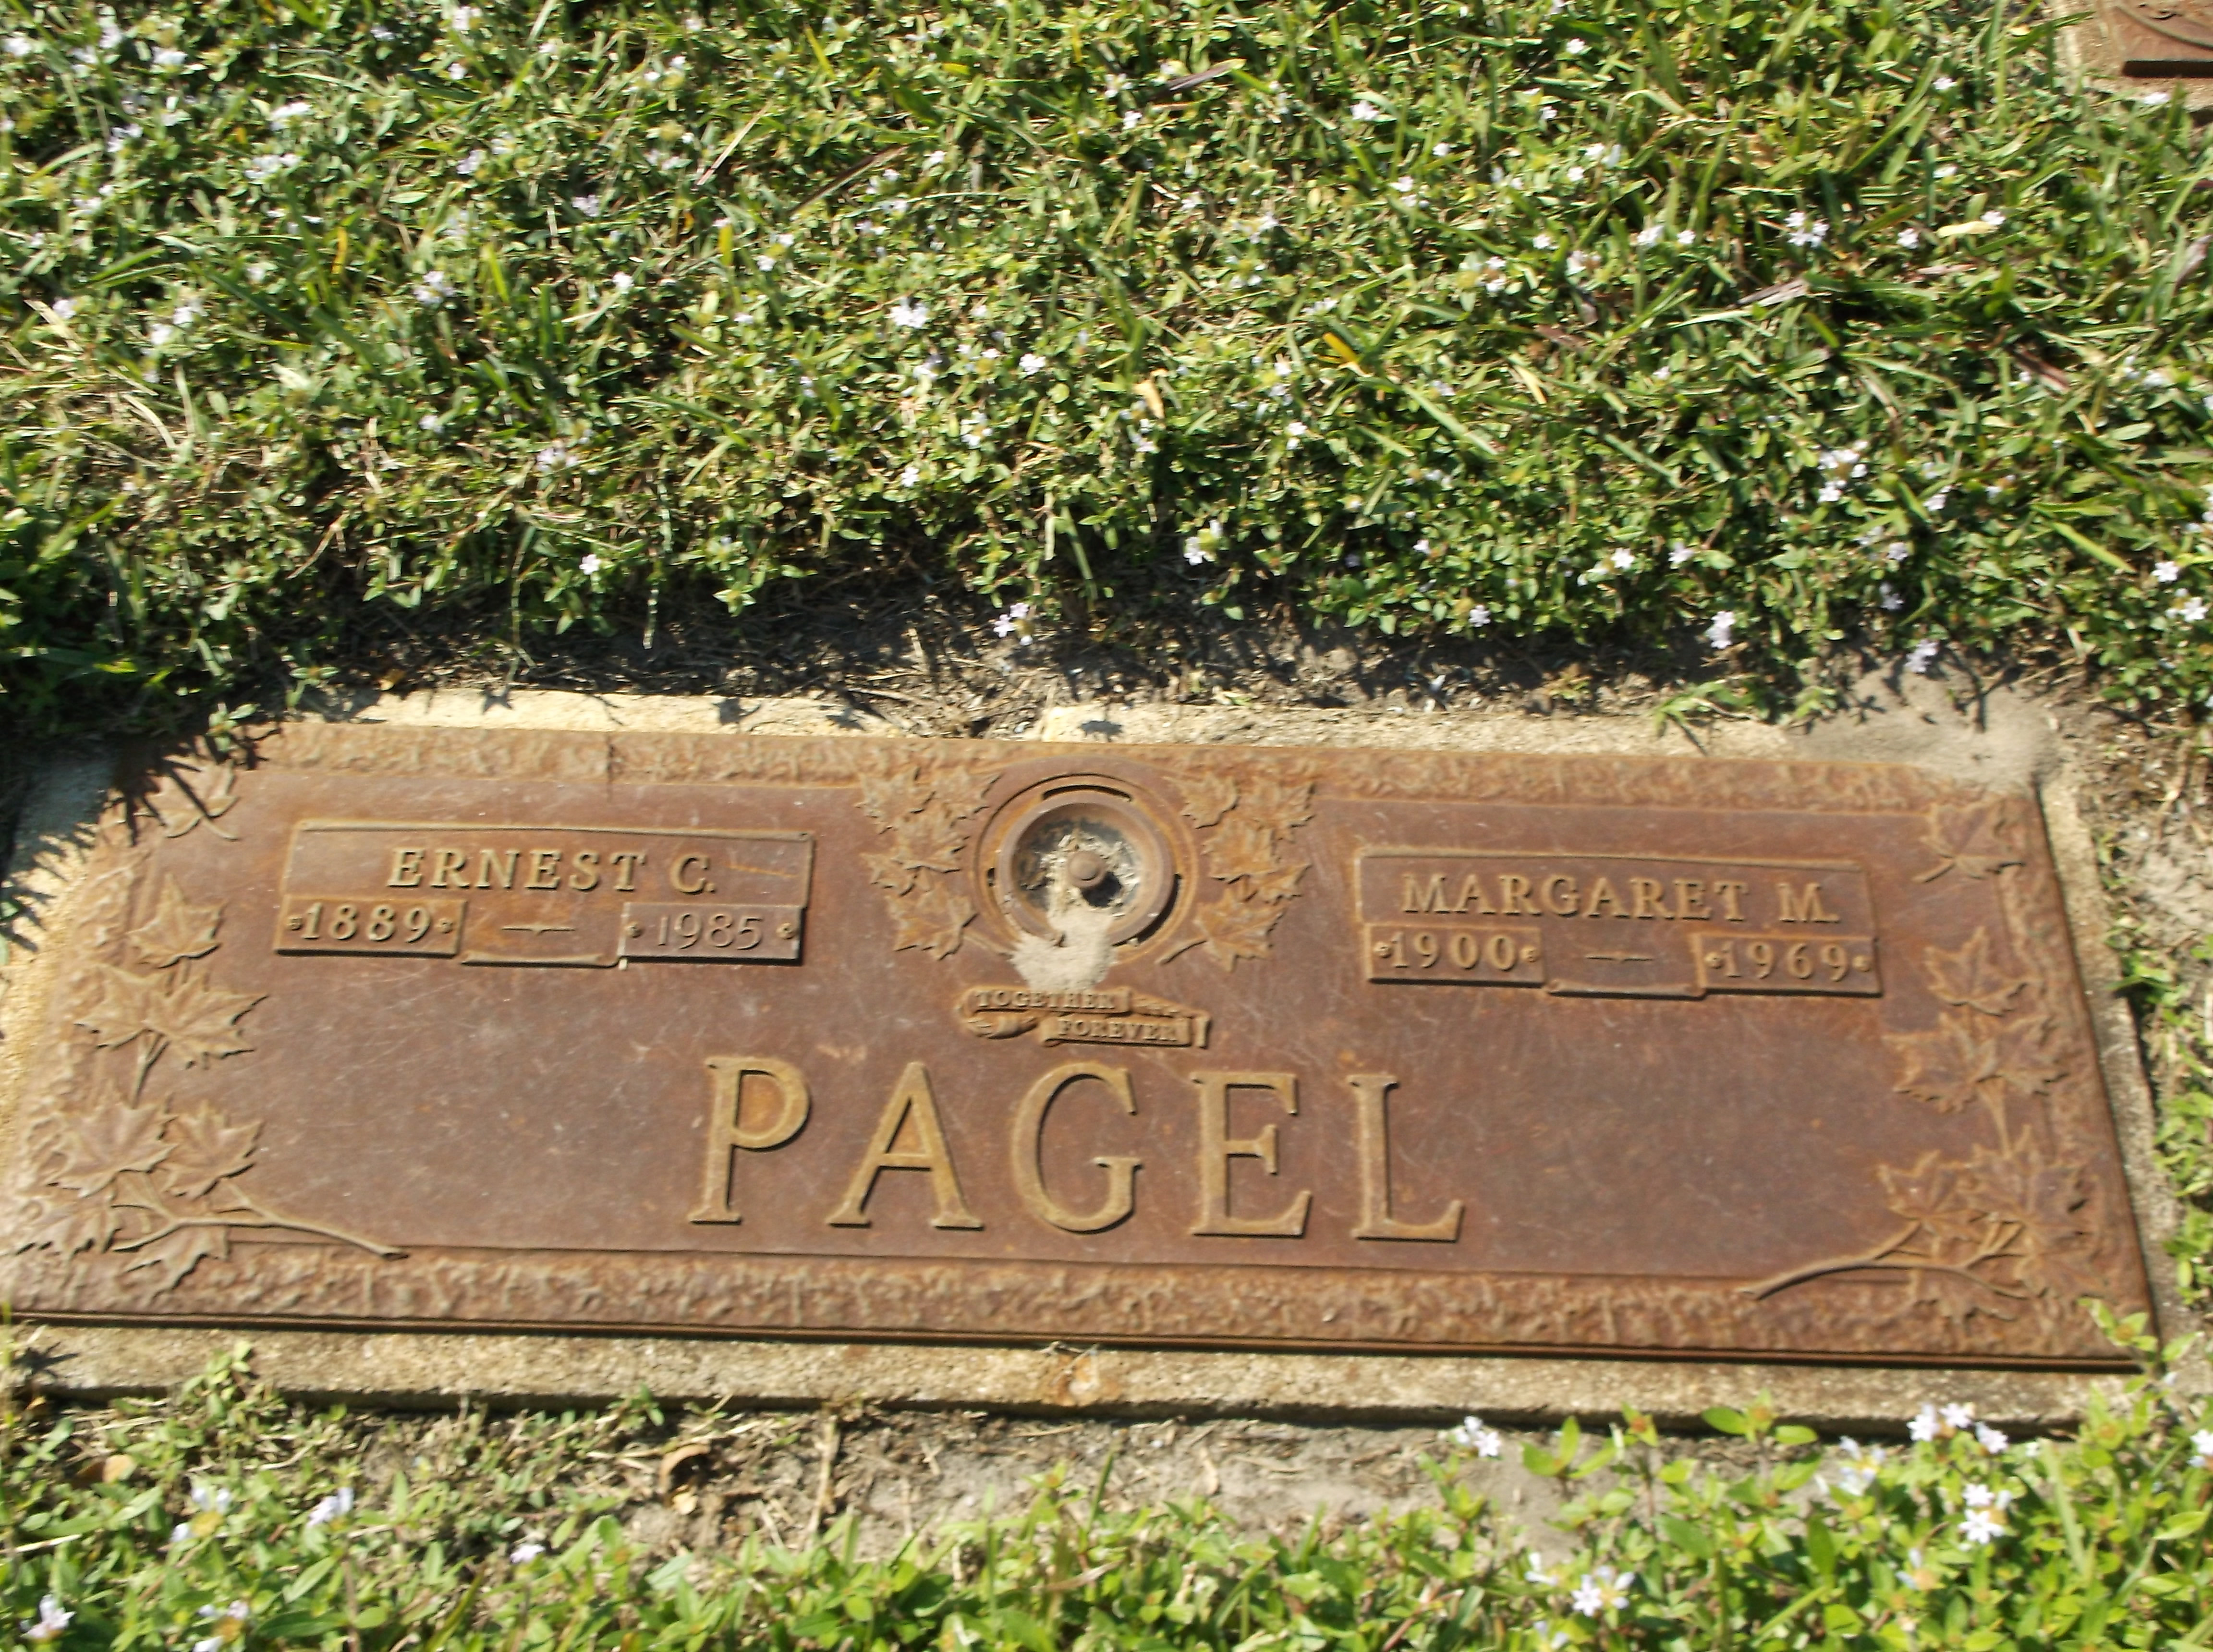 Margaret M Pagel